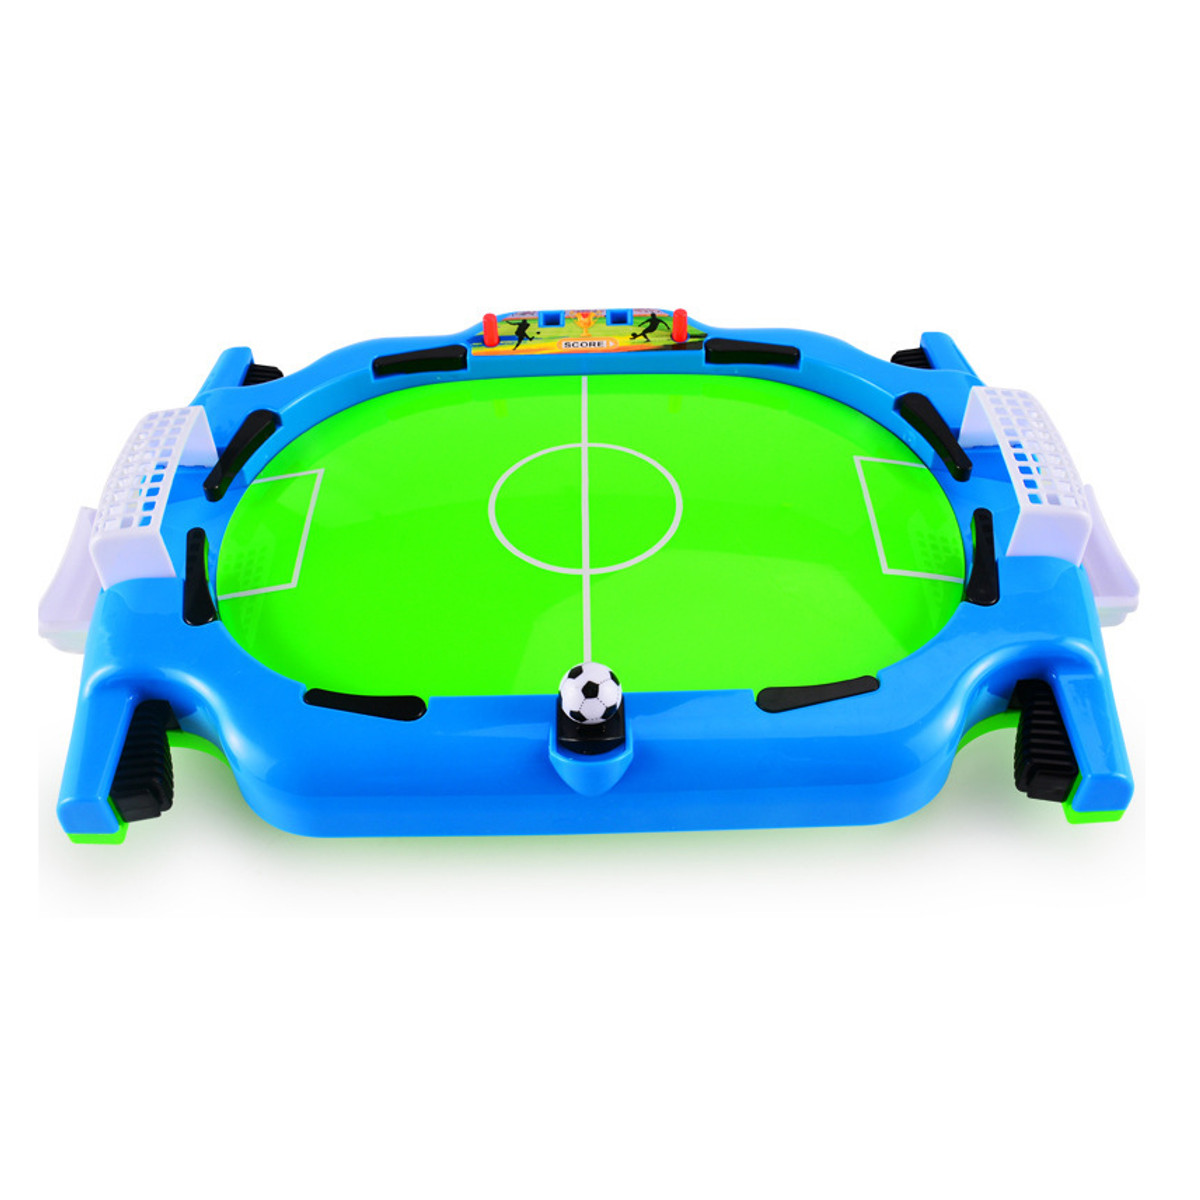 Mini-Table-Top-Football-Shoot-Game-Kit-Desktop-Soccer-Board-Game-Kids-Toys-Gifts-1653645-7